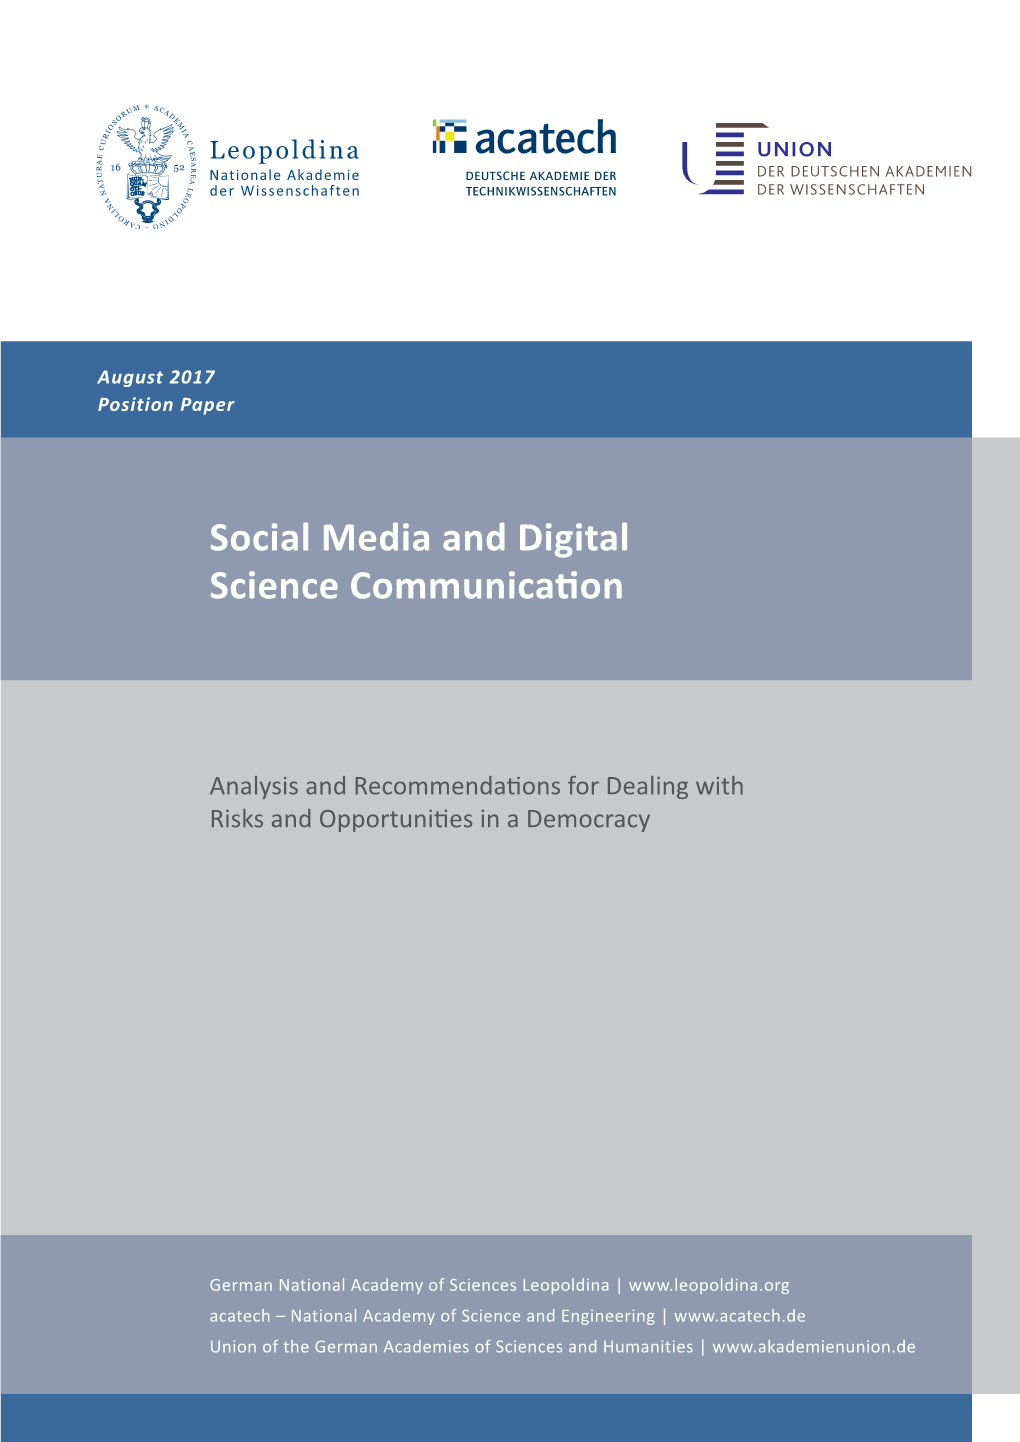 Social Media and Digital Science Communication